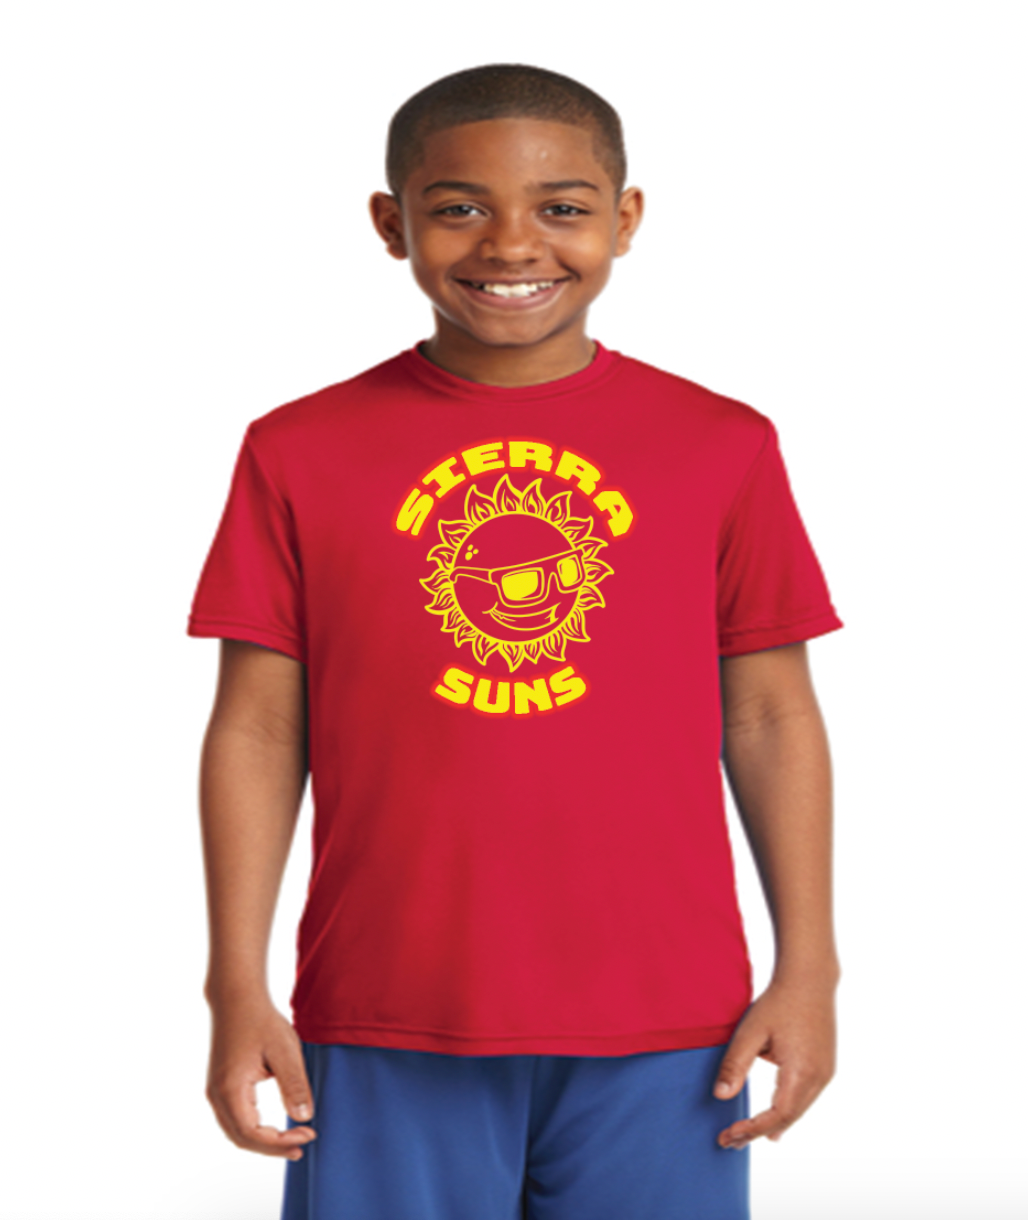 Sierra Suns Performance T-Shirt